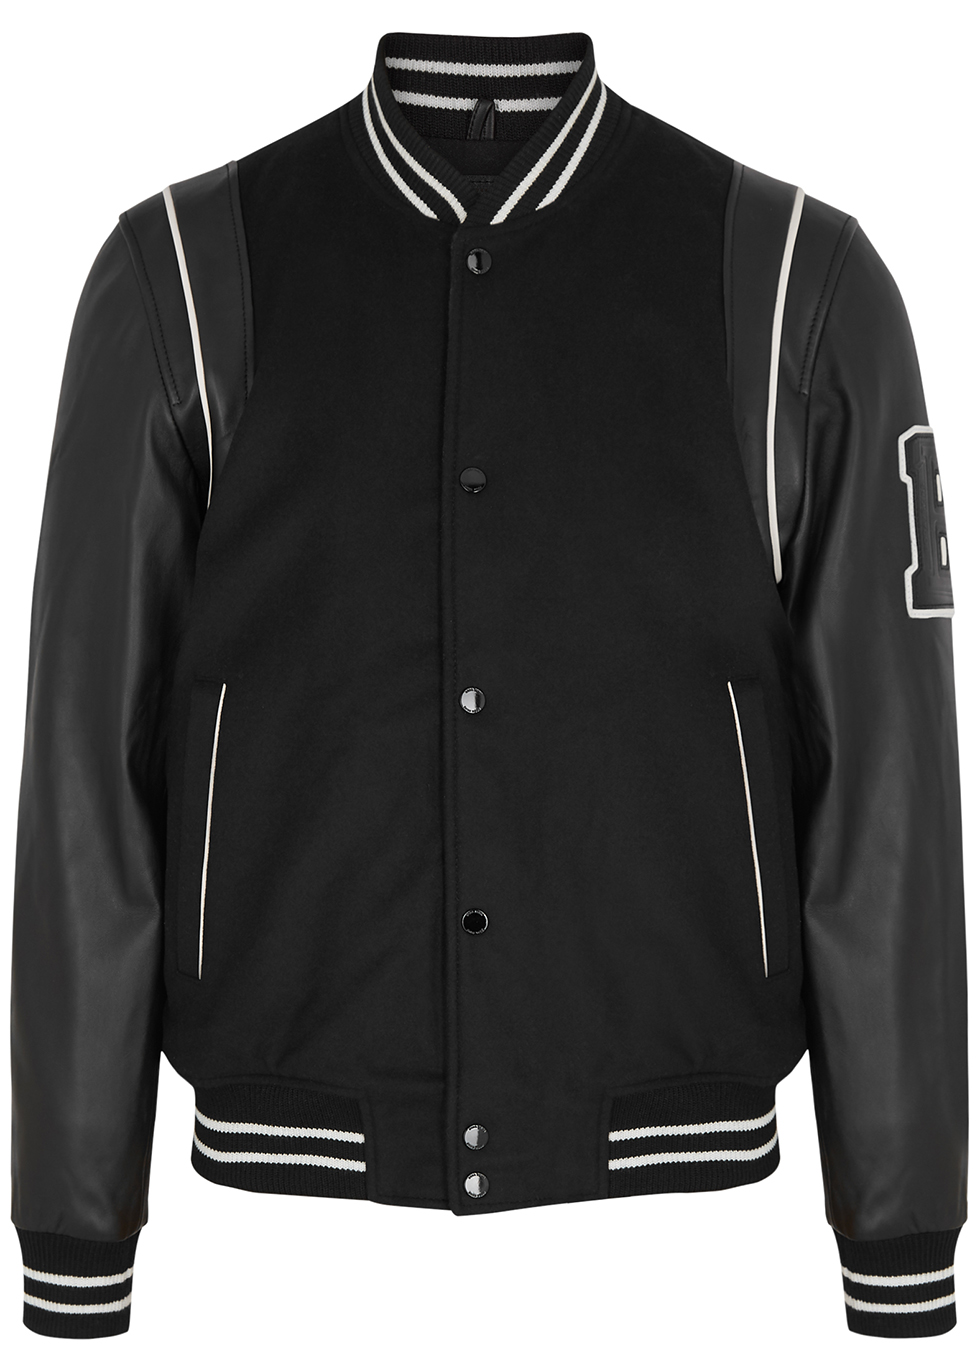 BODA SKINS Black wool-blend and leather varsity jacket